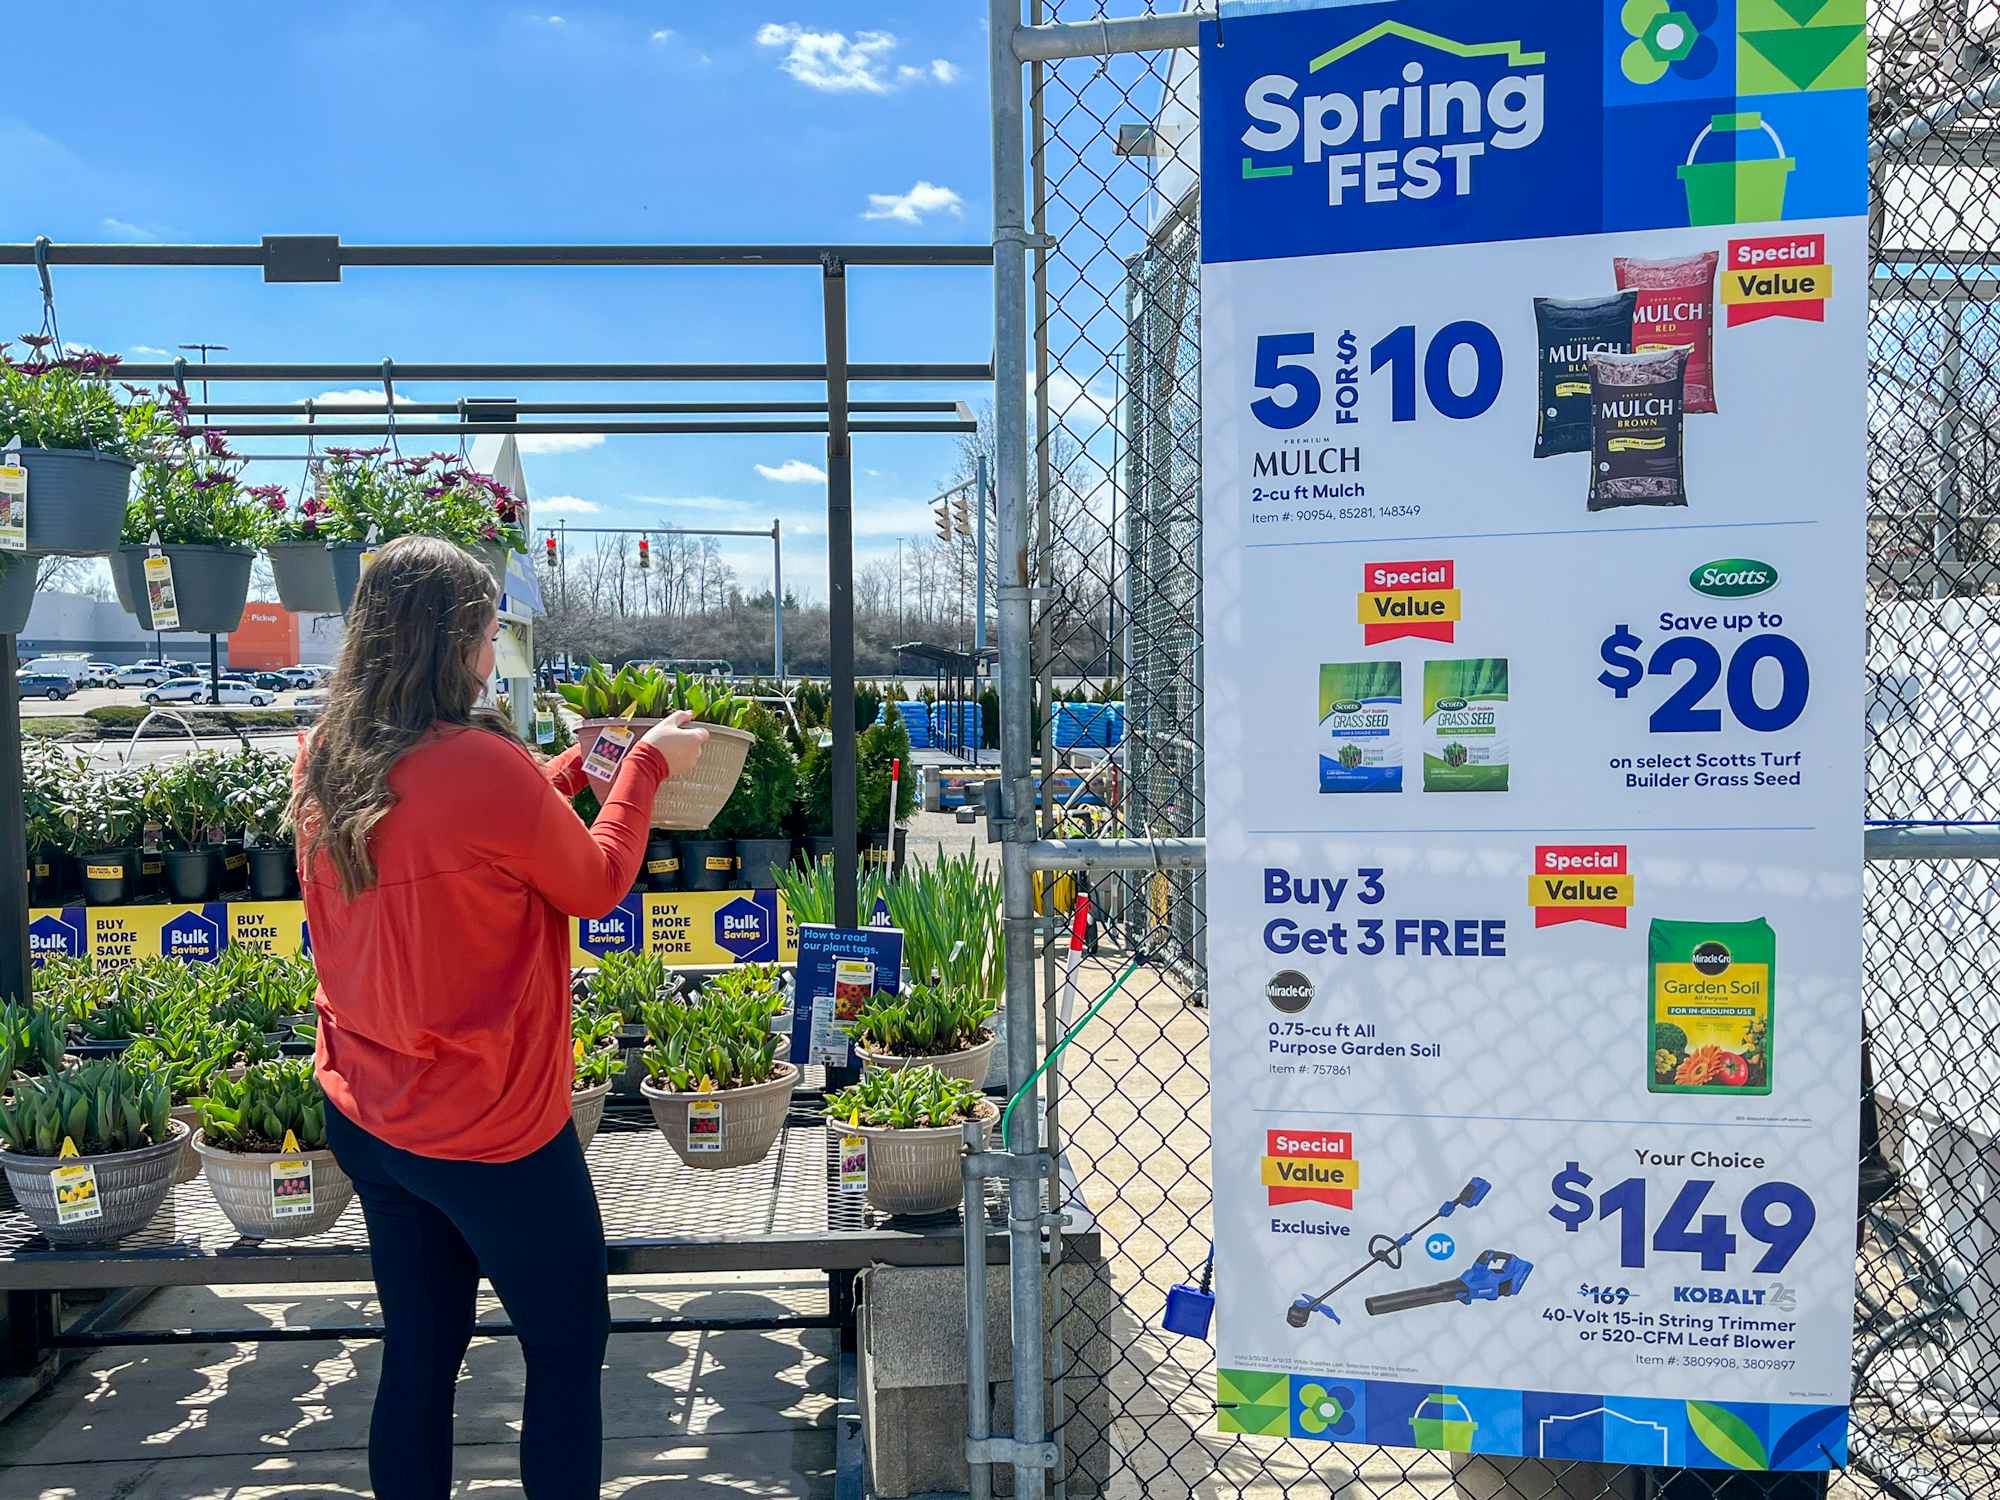 lowes-spring-sale-springfest-deals-outside-sign-model